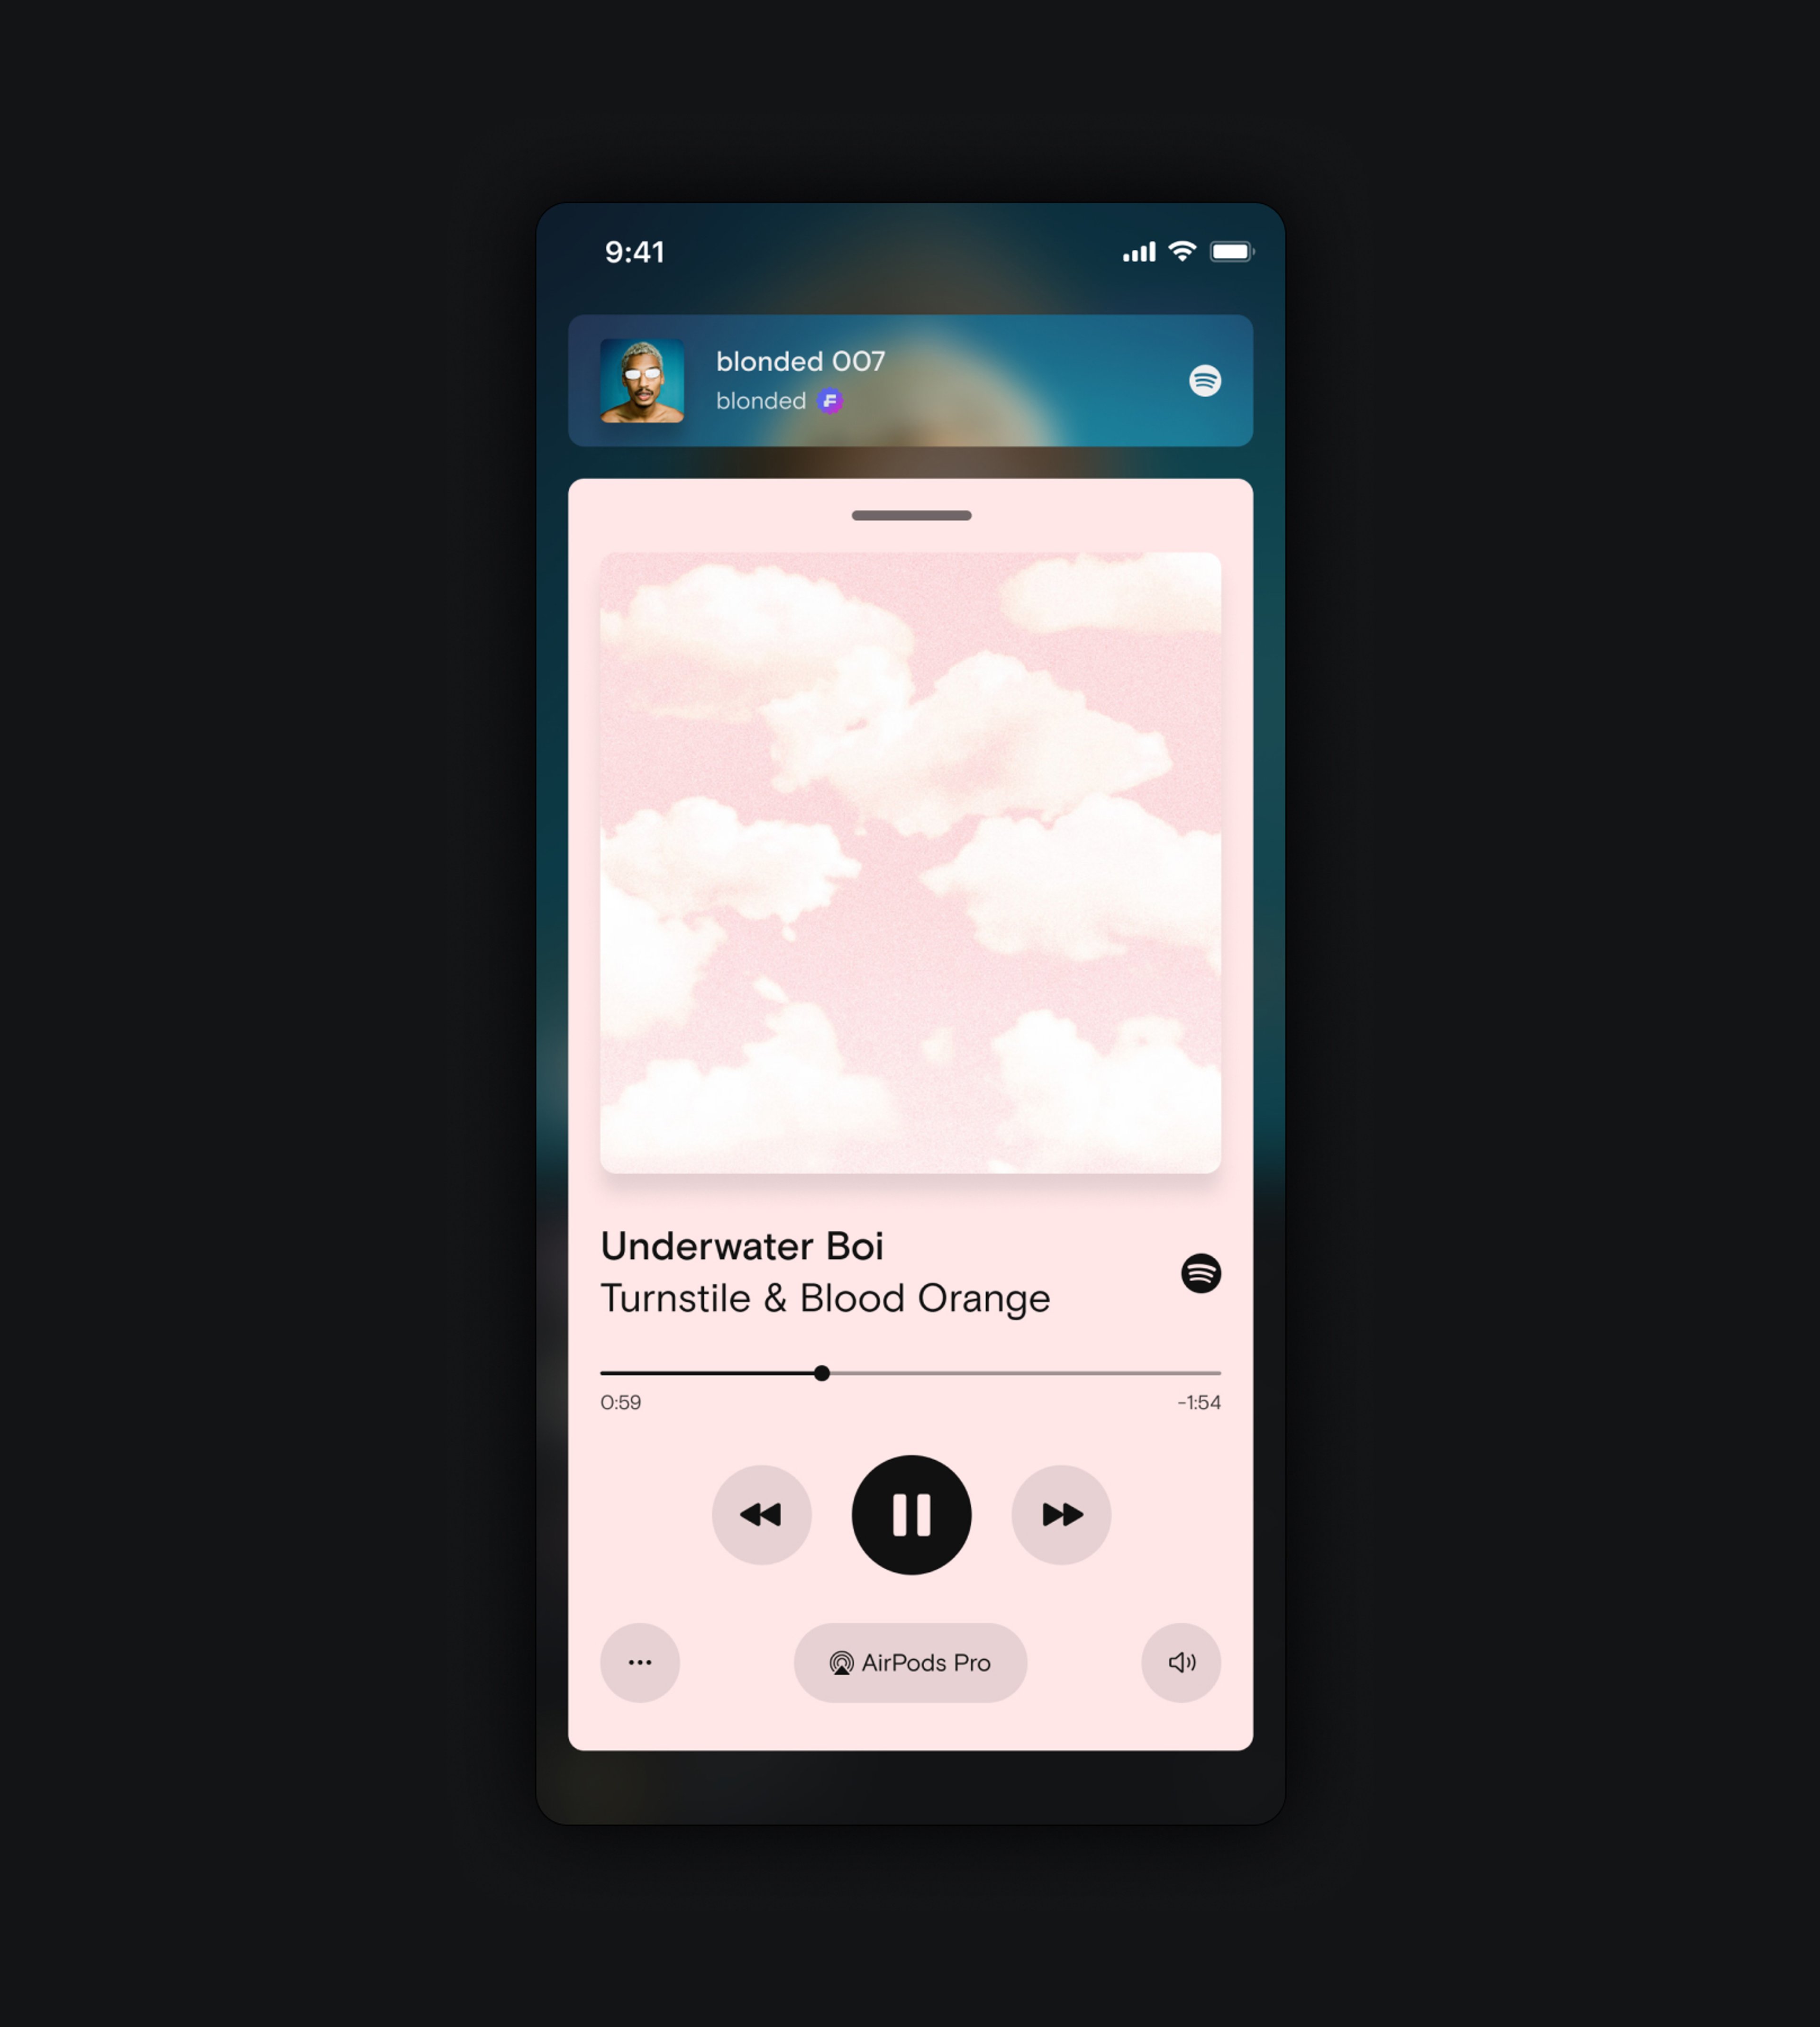 Screenshot of the music player showing "Underwater Boi" by Turnstile & Blood Orange